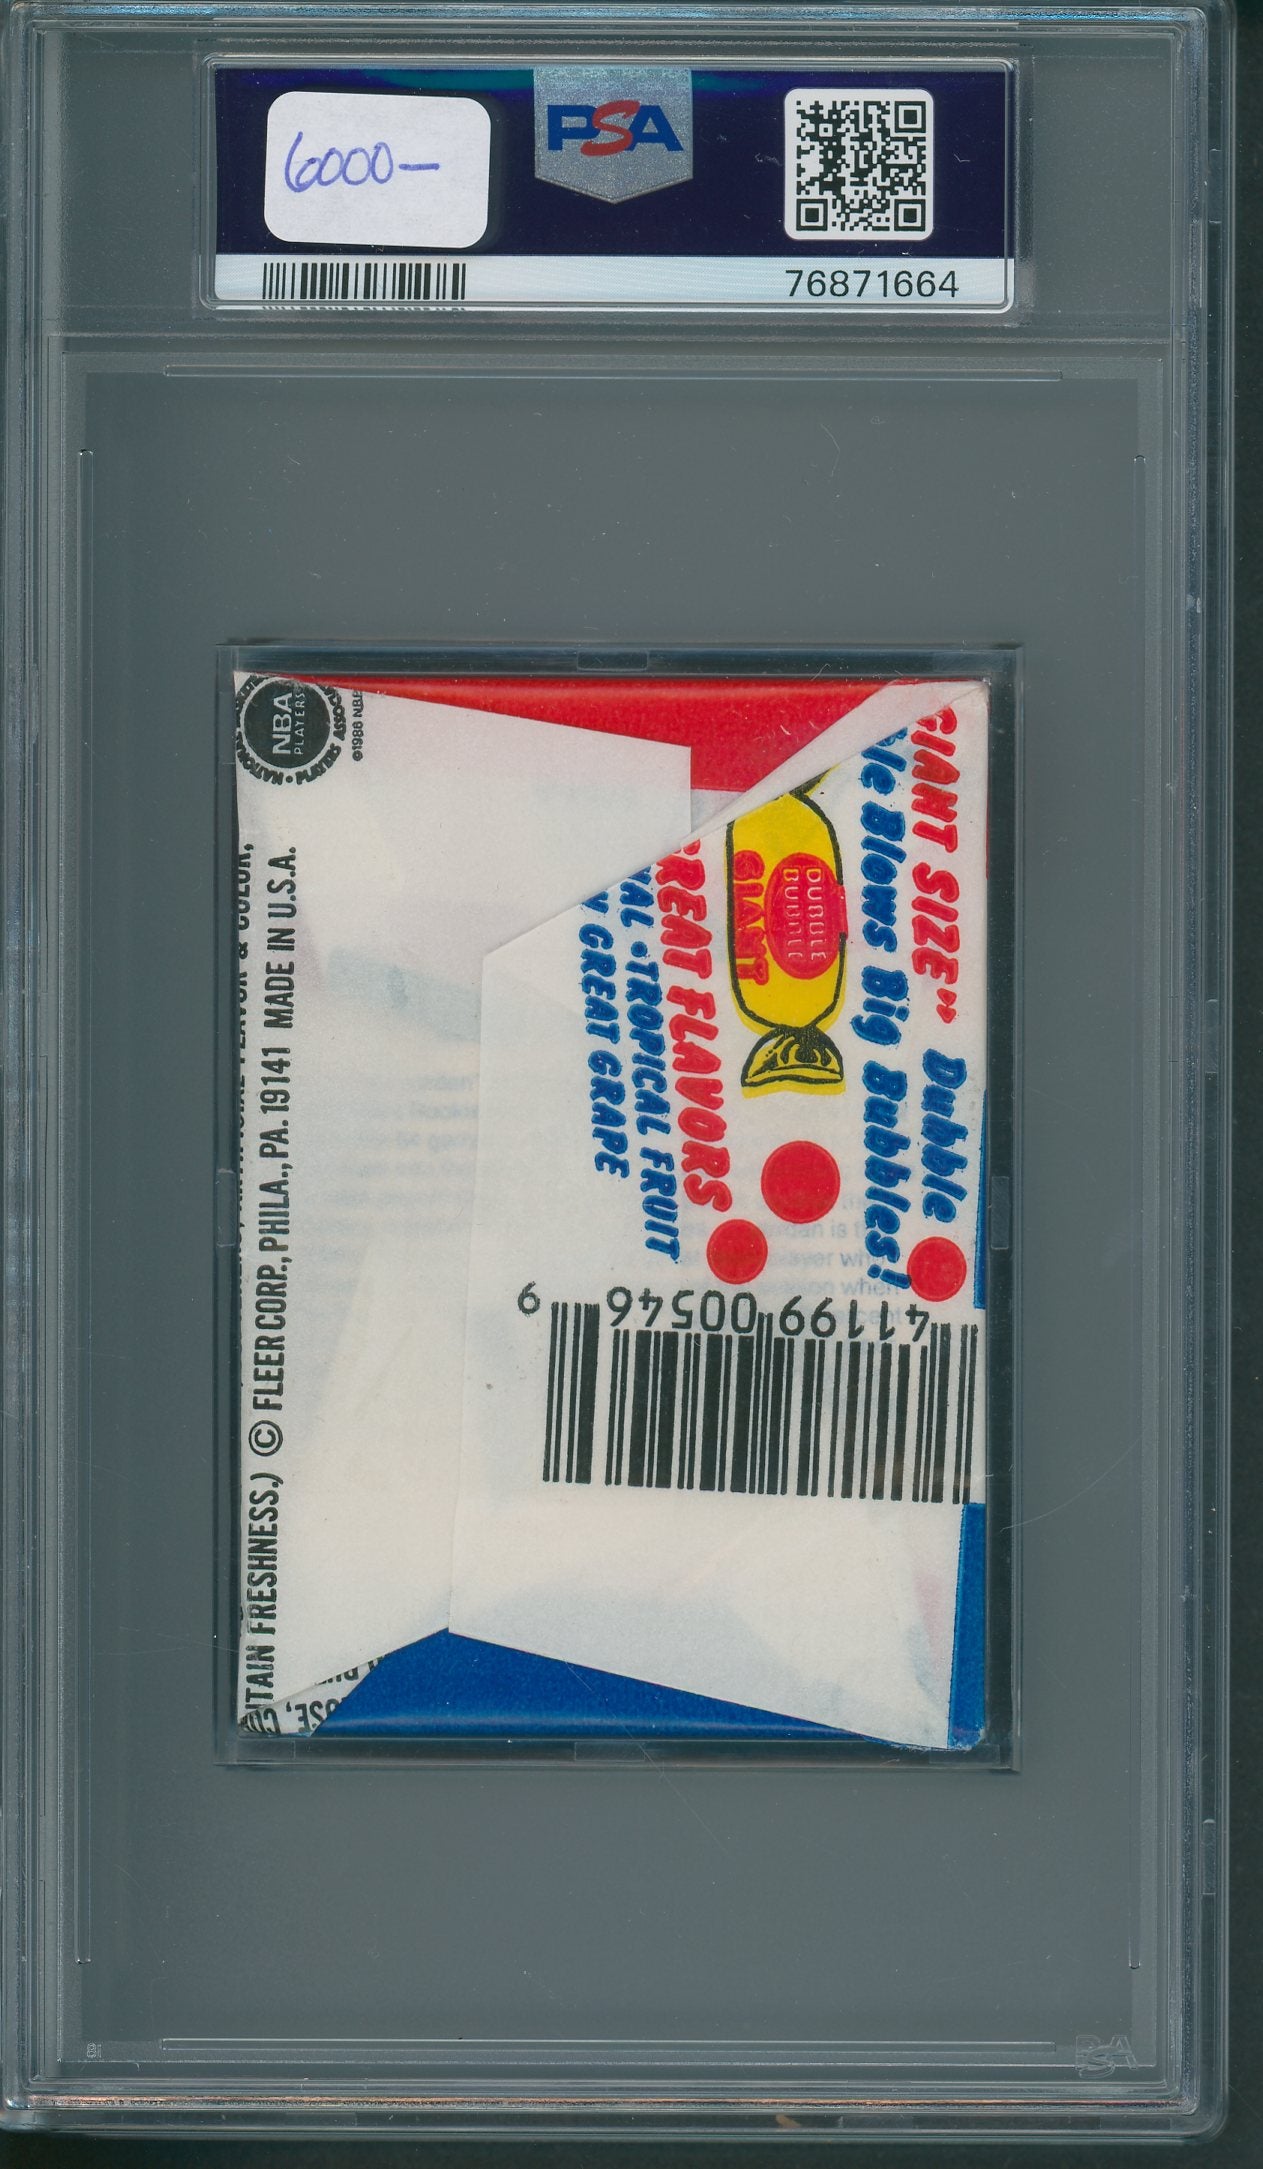 1986 1986/87 Fleer Basketball Unopened Wax Pack PSA 7 (Ewing Top) (Jordan Sticker Back) (*1664)